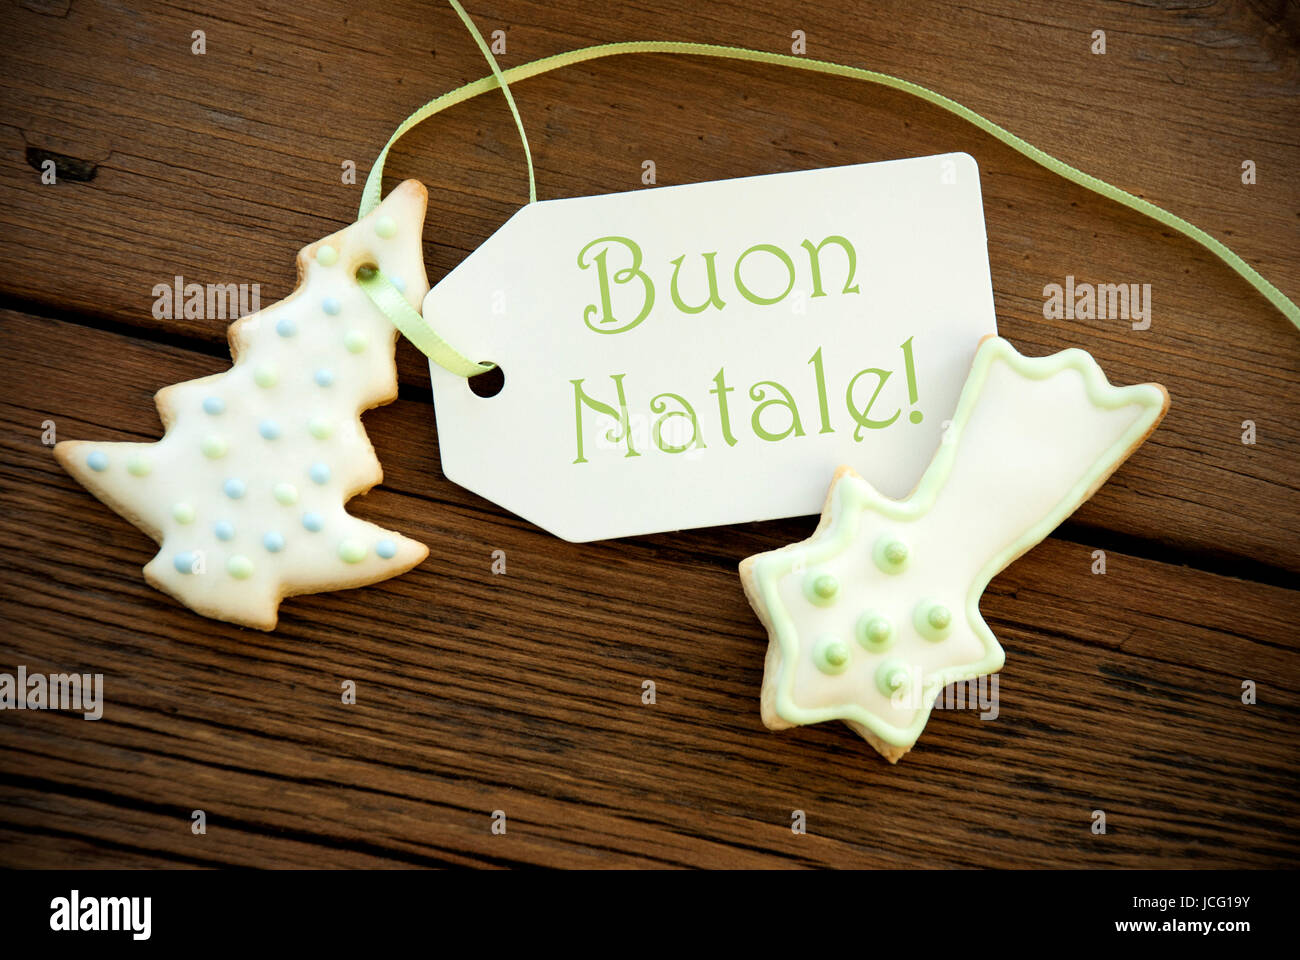 Buon Natale Que Significa En Espanol.Buon Natale Fotos E Imagenes De Stock Alamy